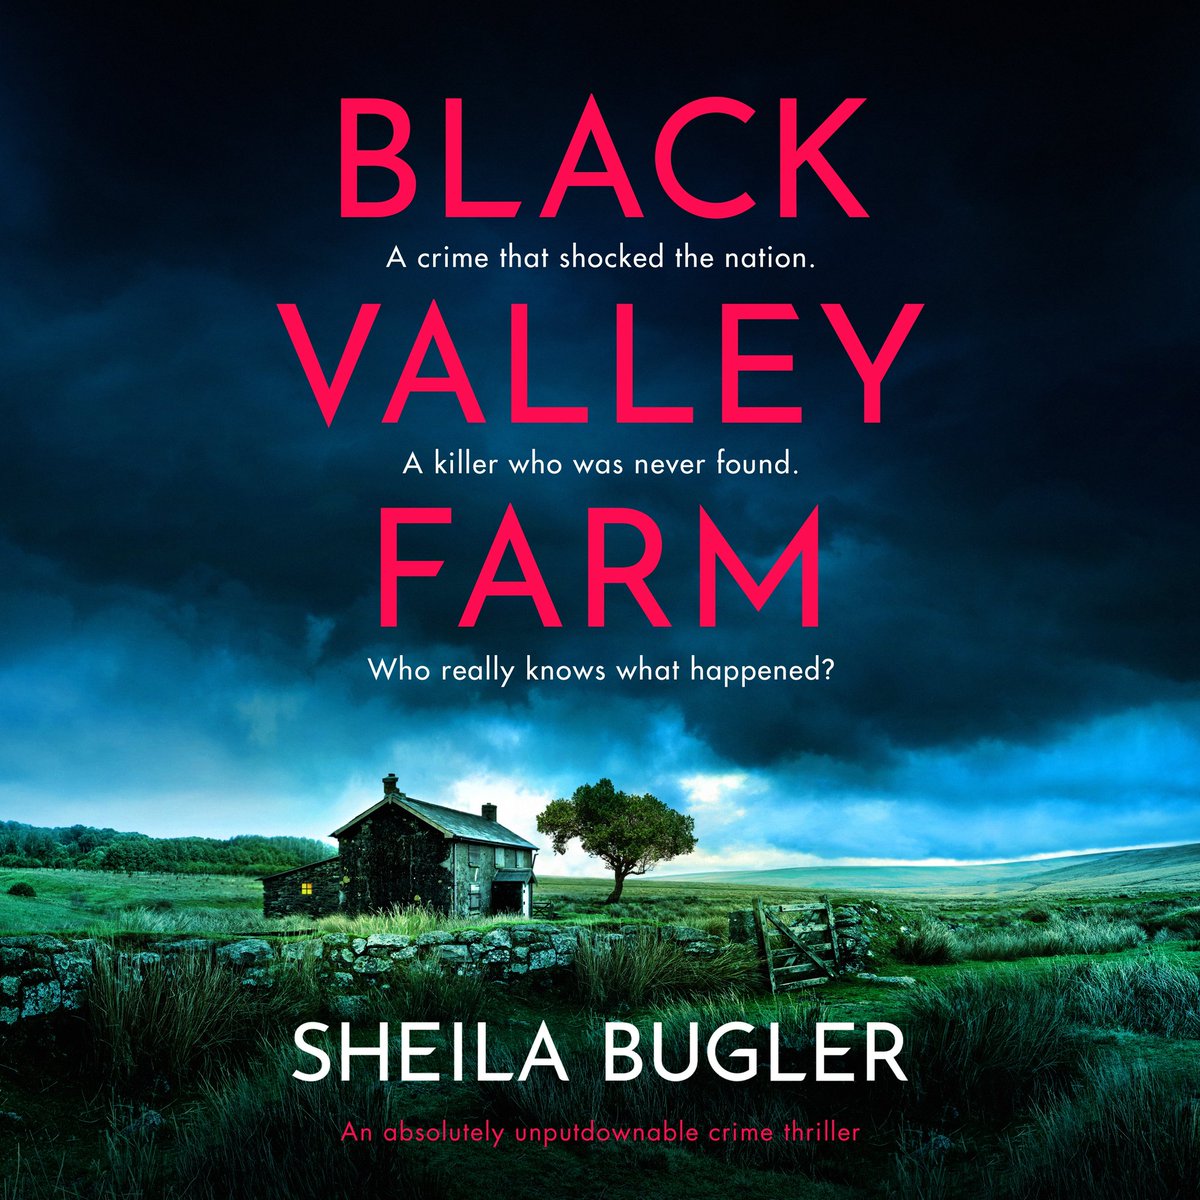 Sneak preview of the opening chapter #BlackValleyFarm #crimereadingmonth sheilabugler.co.uk/black-valley-f…